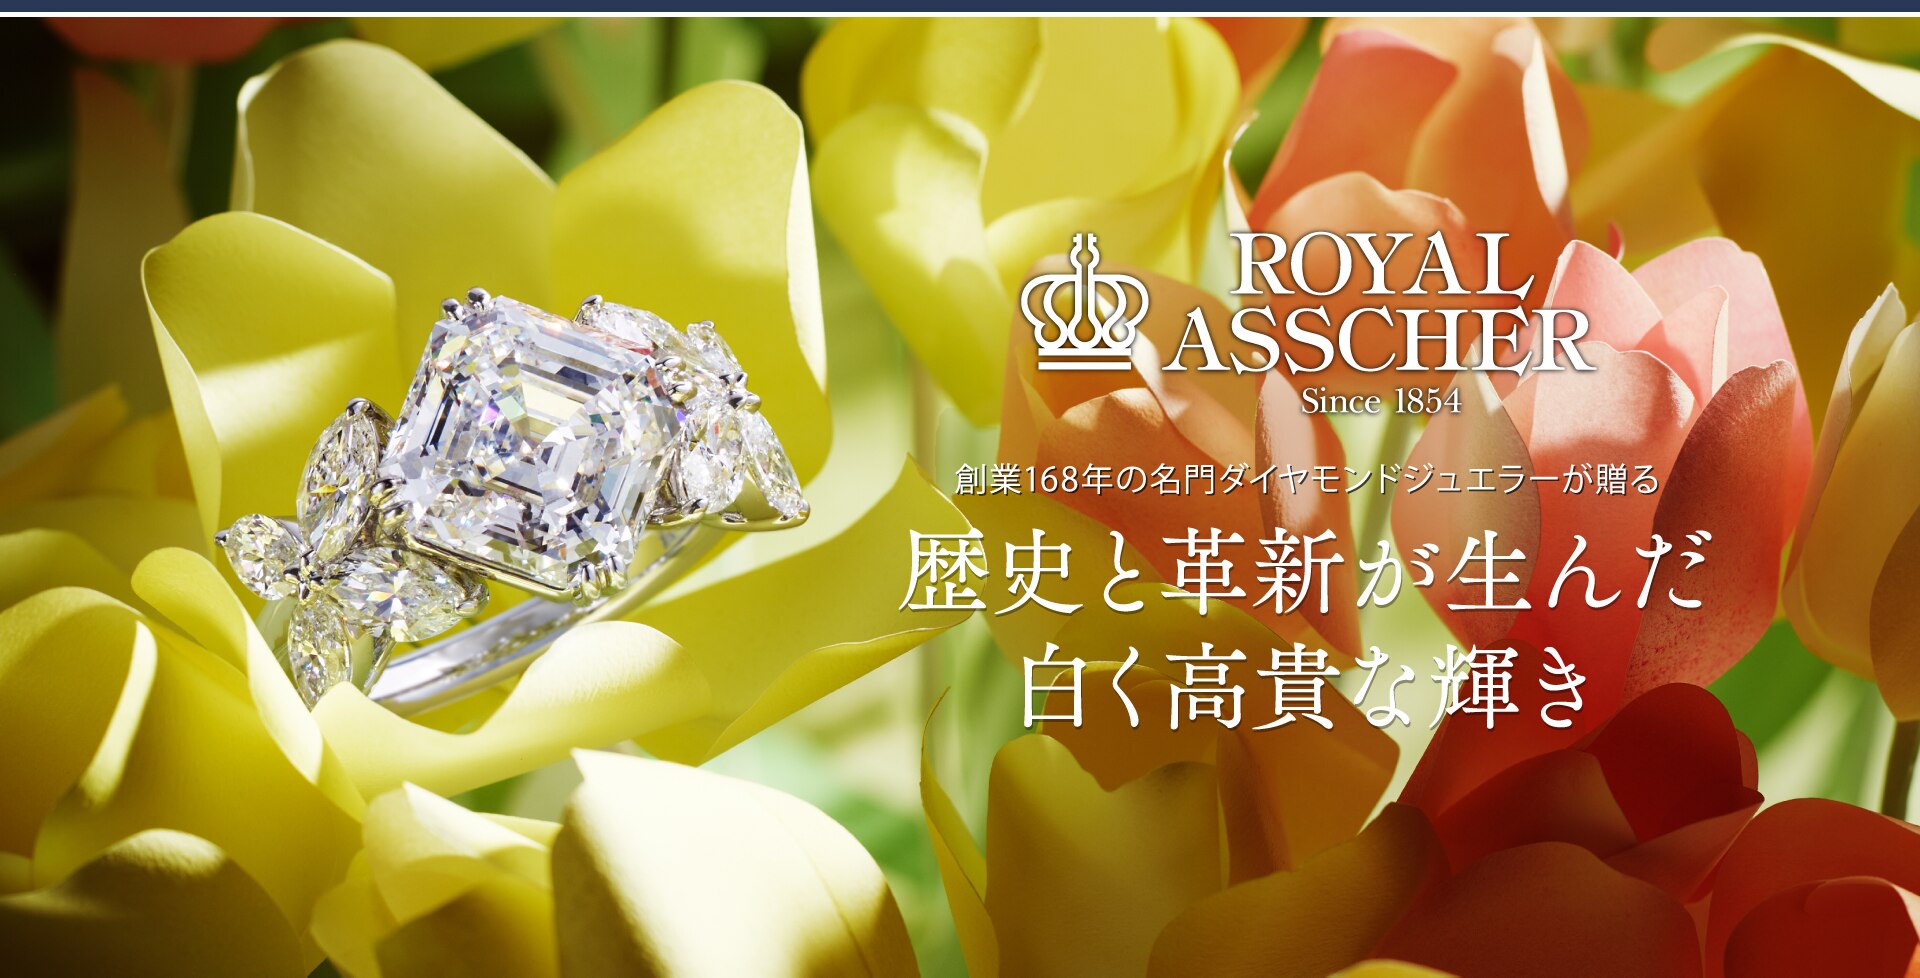 ROYAL ASSCHER Since1854 創業168年の名門ダイヤモンドジュエラーが贈る 歴史と革新が生んだ白く高貴な輝き